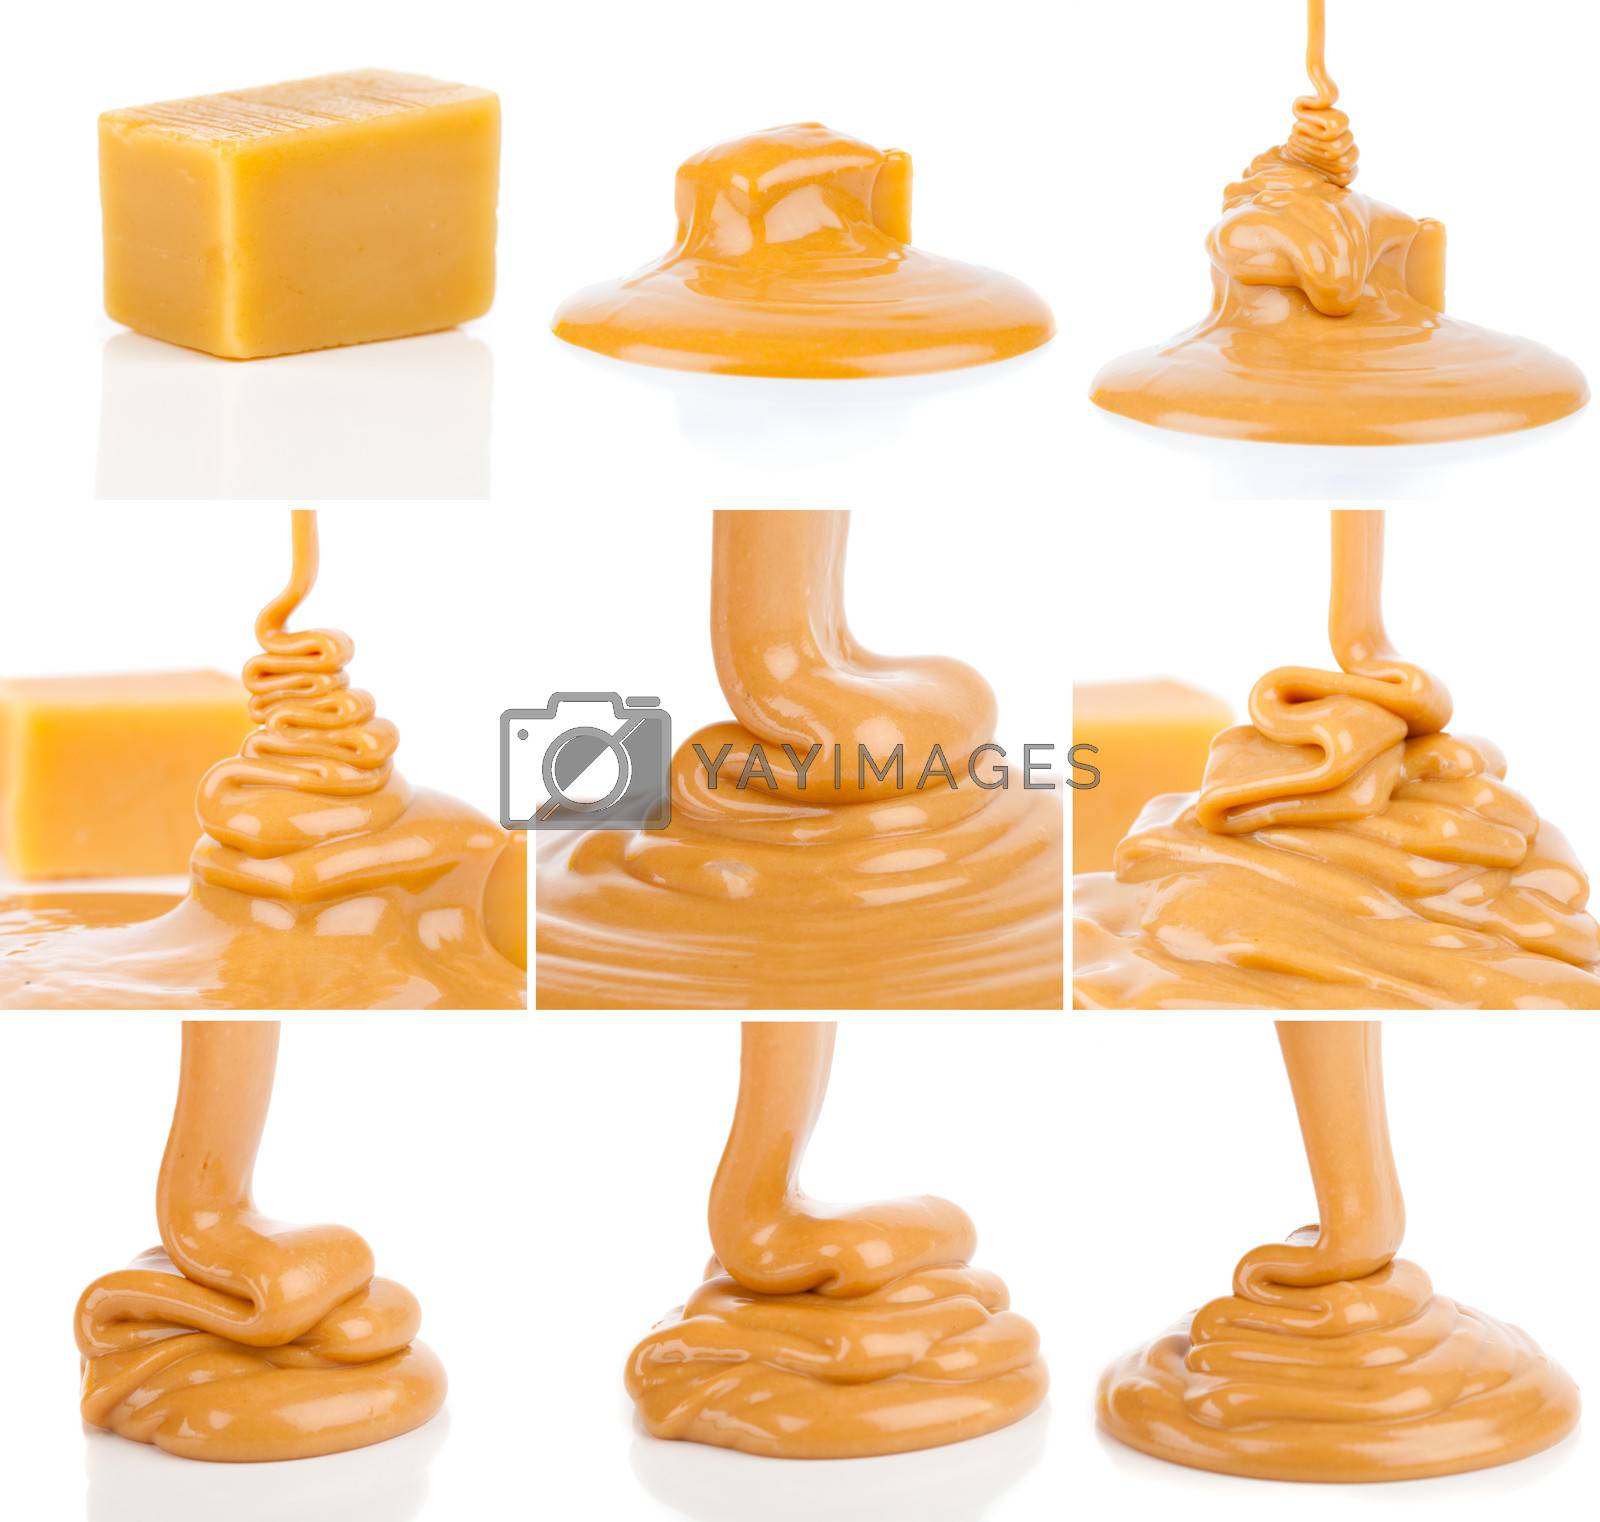 Royalty free image of liquid caramel by motorolka